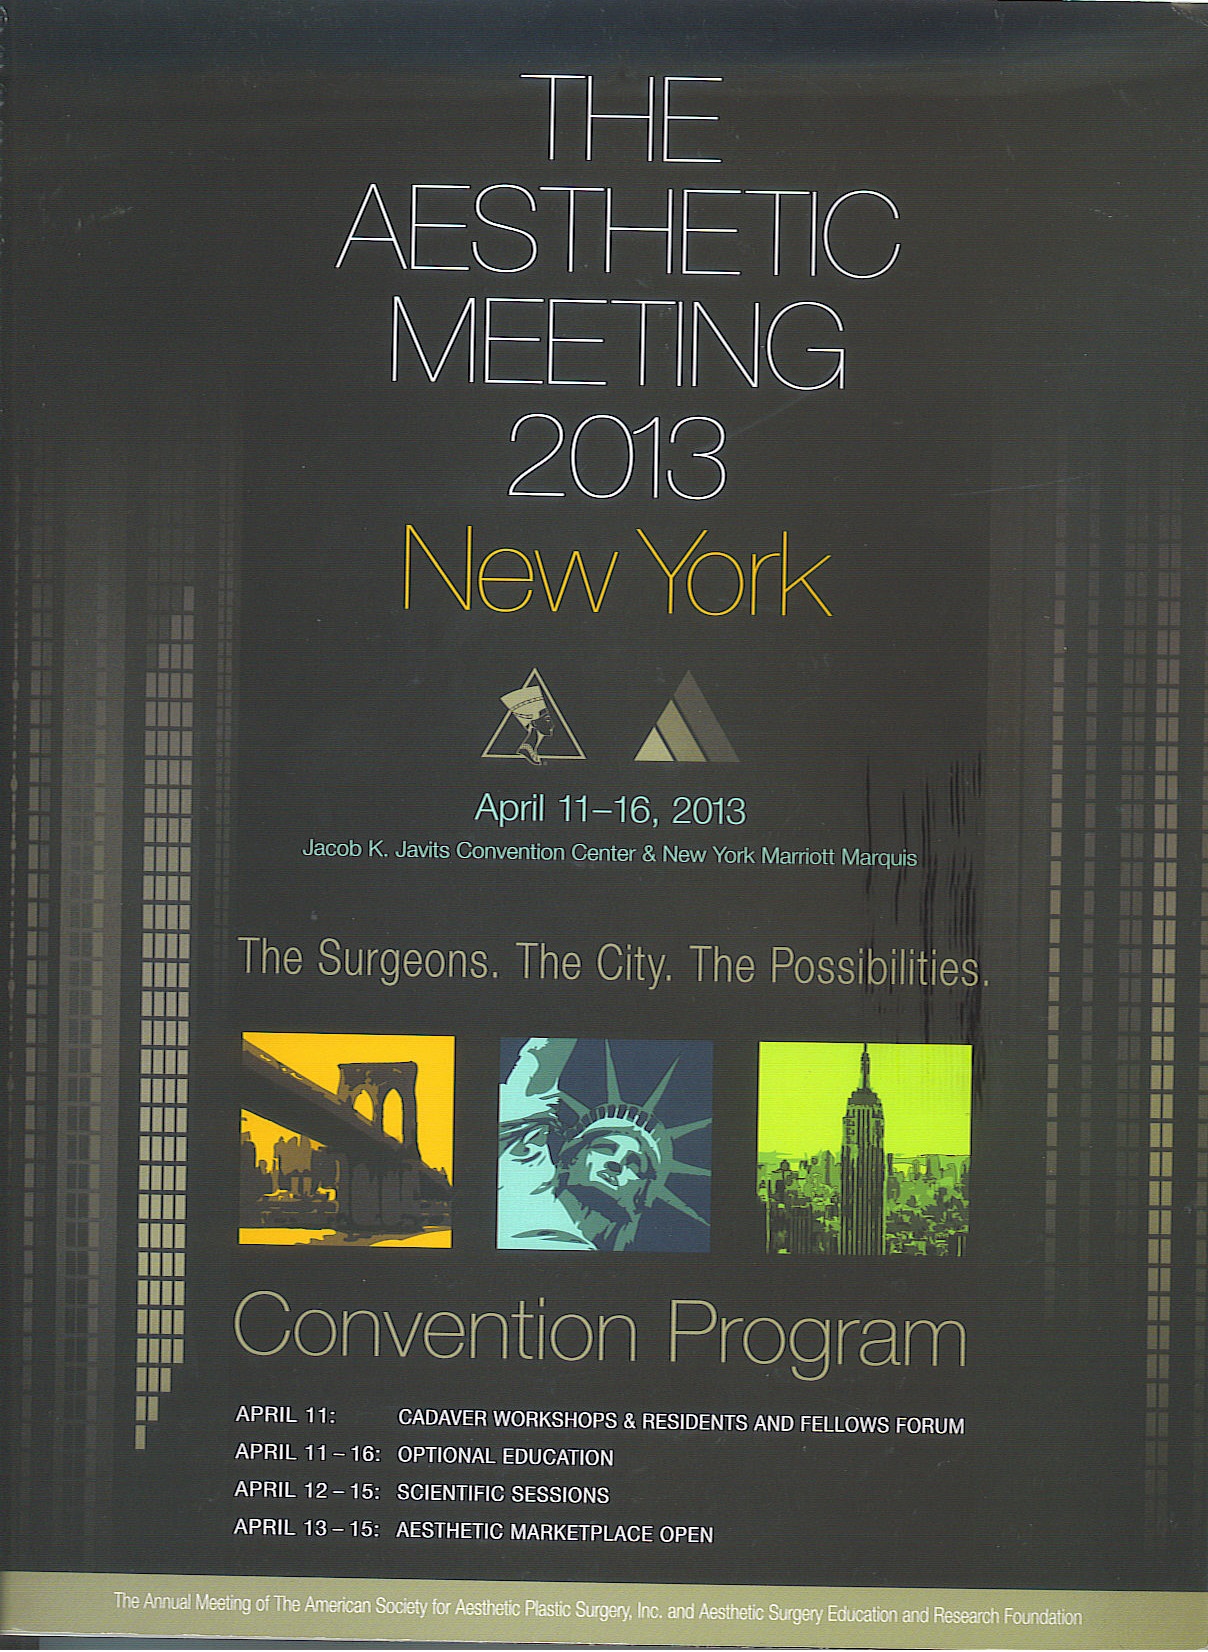 The Aeshetic Meeting 2013 New York April 11 -16, 2013  en New York